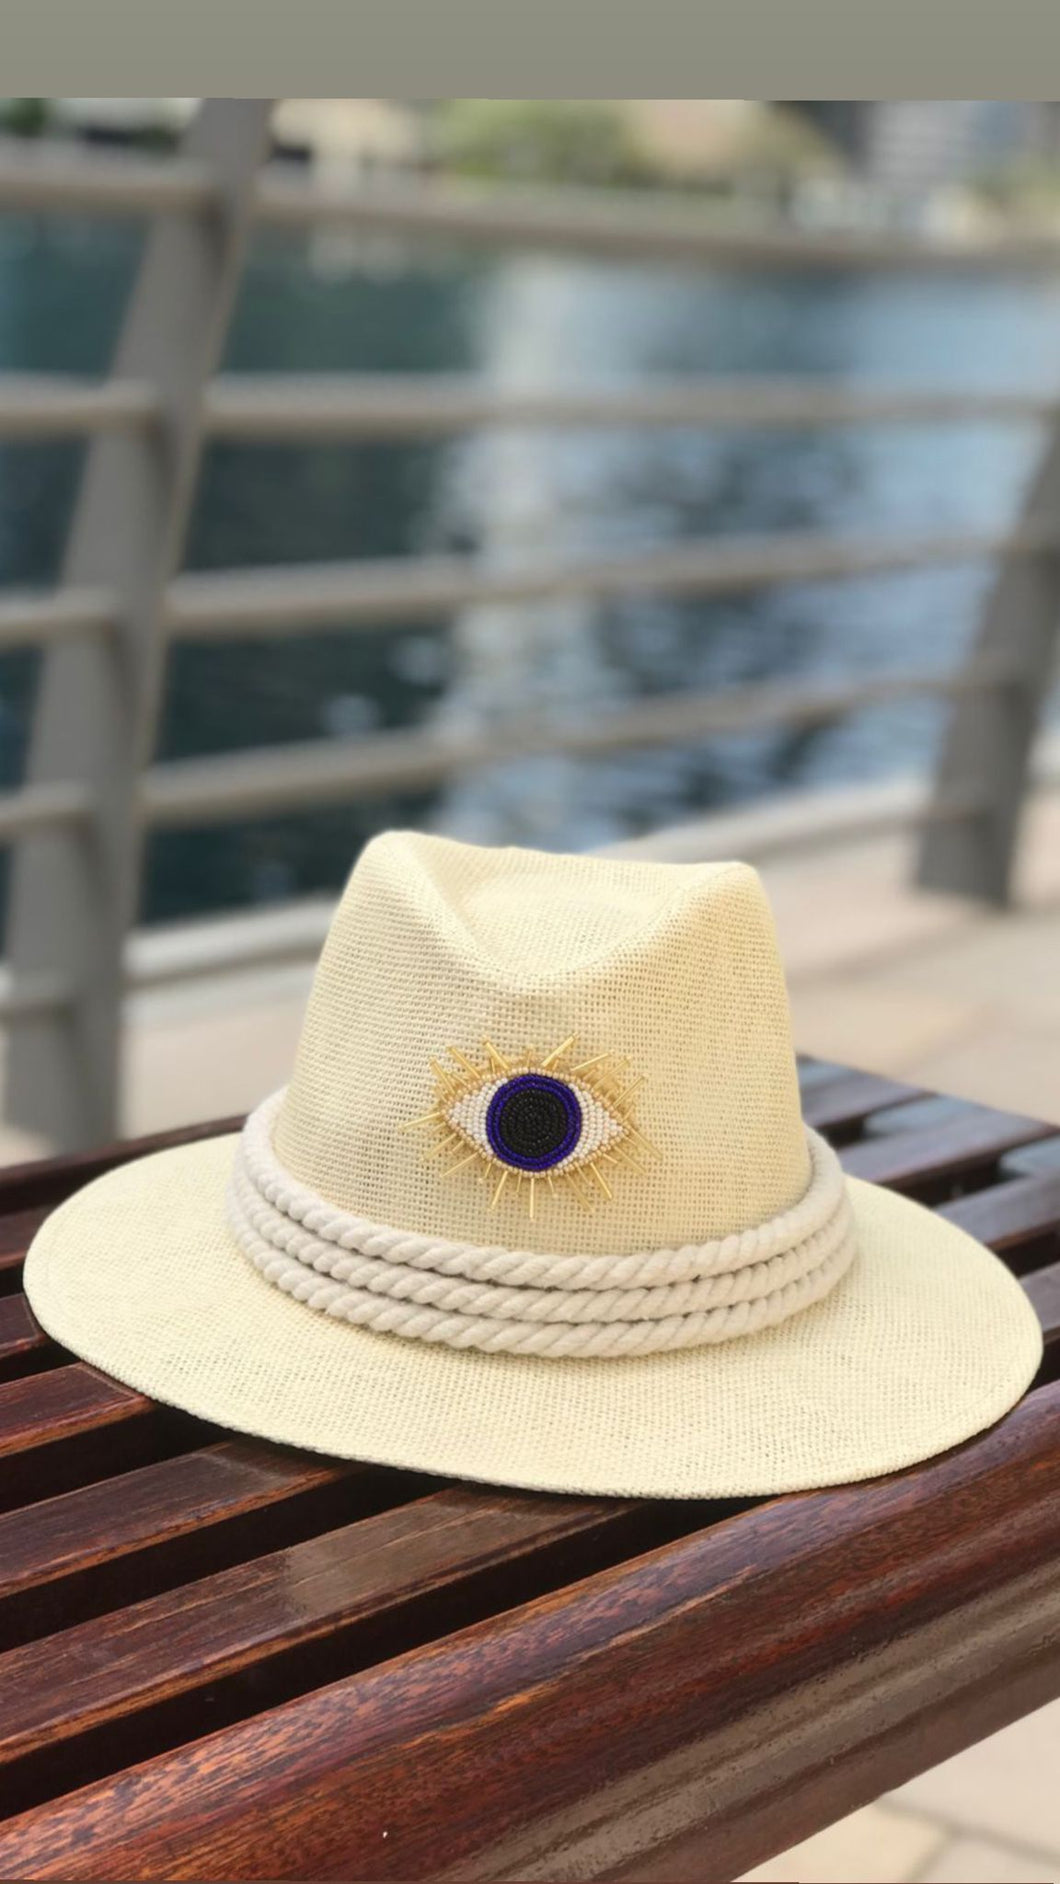 Boho hat with eye